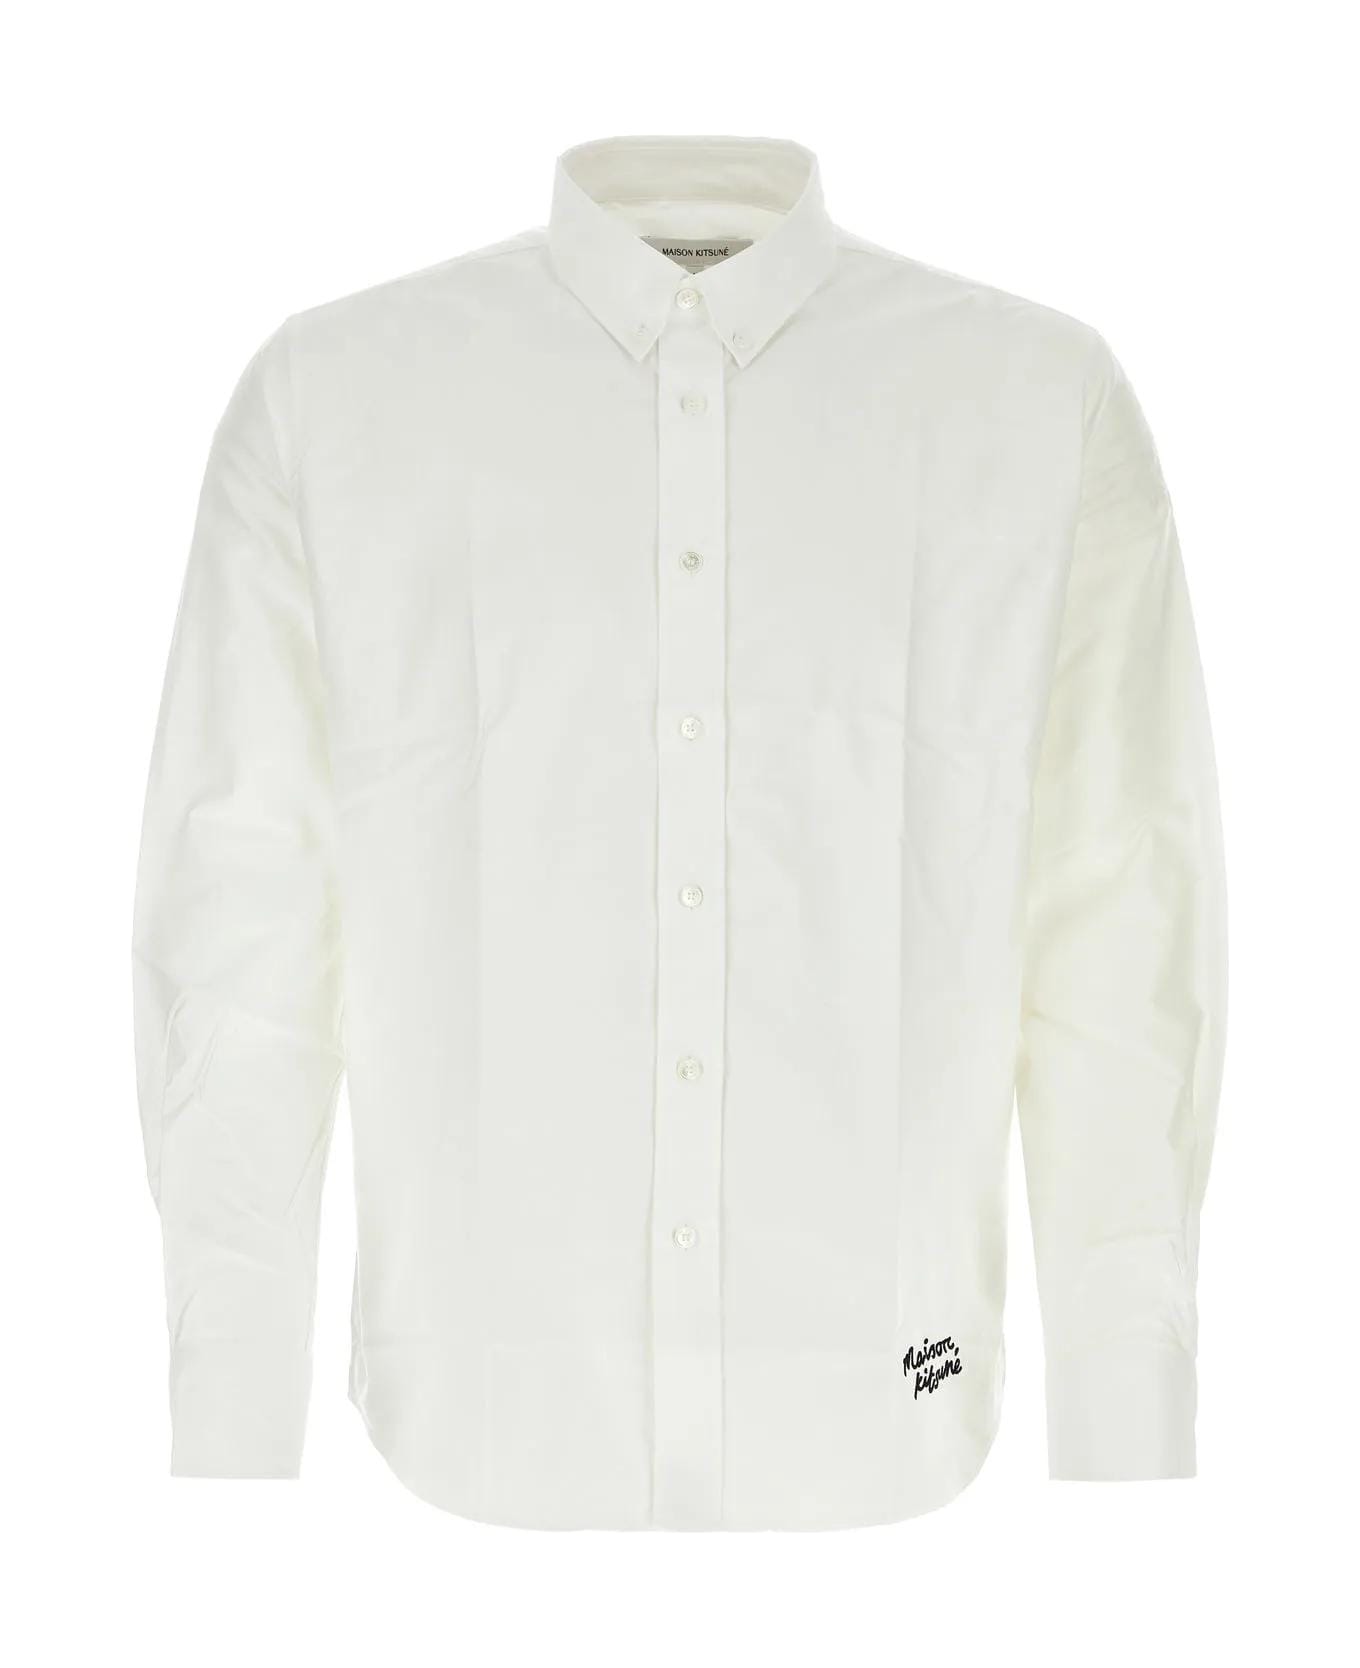 Maison Kitsuné White Cotton Shirt - P100 WHITE